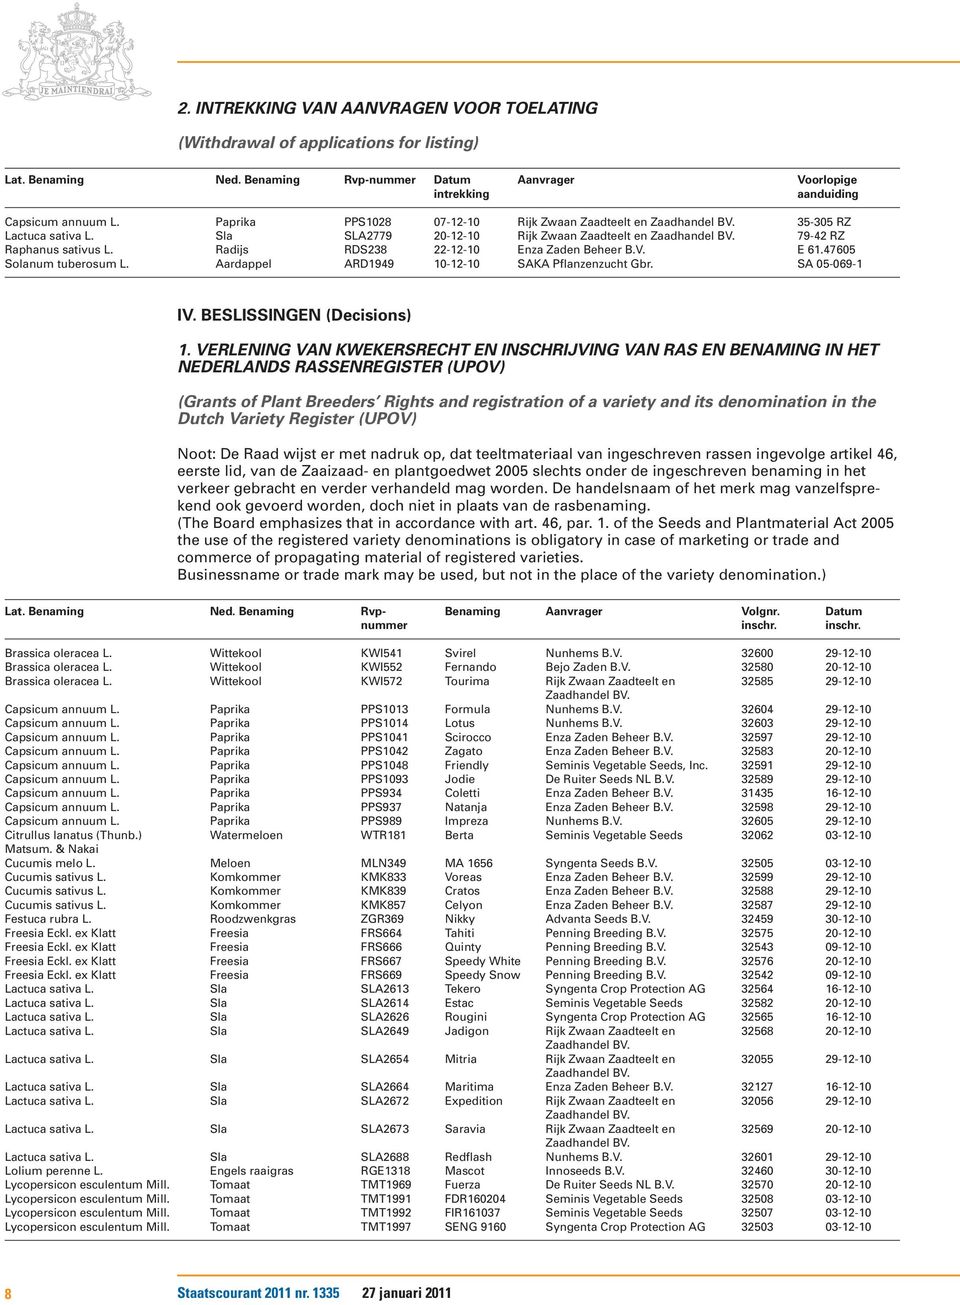 47605 Solanum tuberosum L. Aardappel ARD1949 10-12-10 SAKA Pflanzenzucht Gbr. SA 05-069-1 IV. BESLISSINGEN (Decisions) 1.